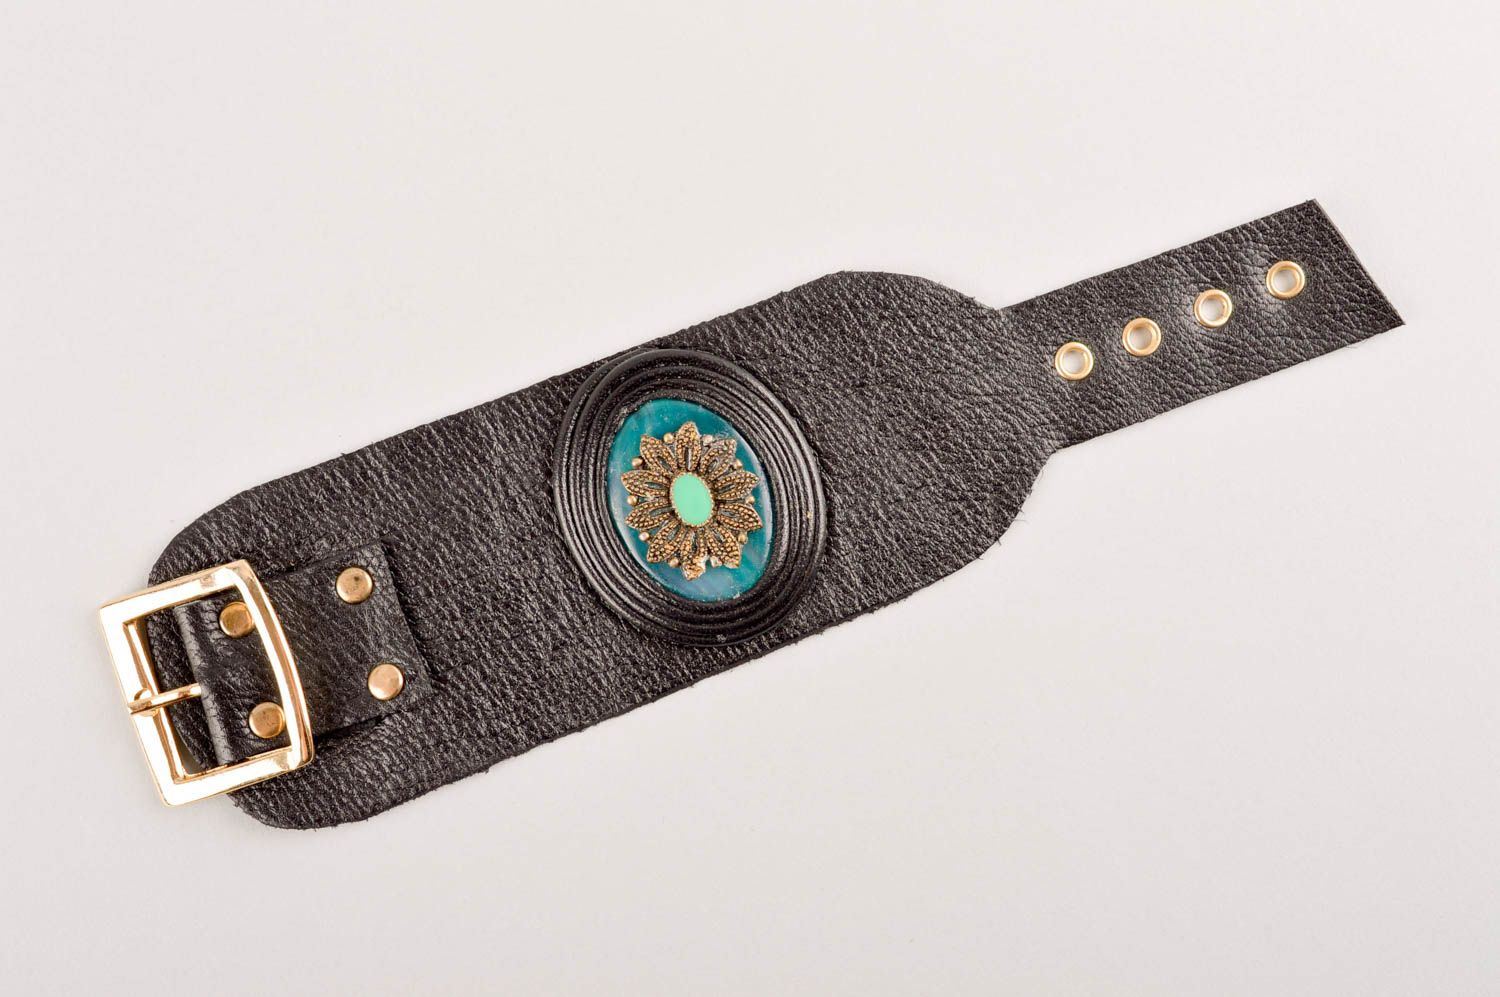 Unusual homemade bracelet designs leather bracelet accessories for girls photo 2